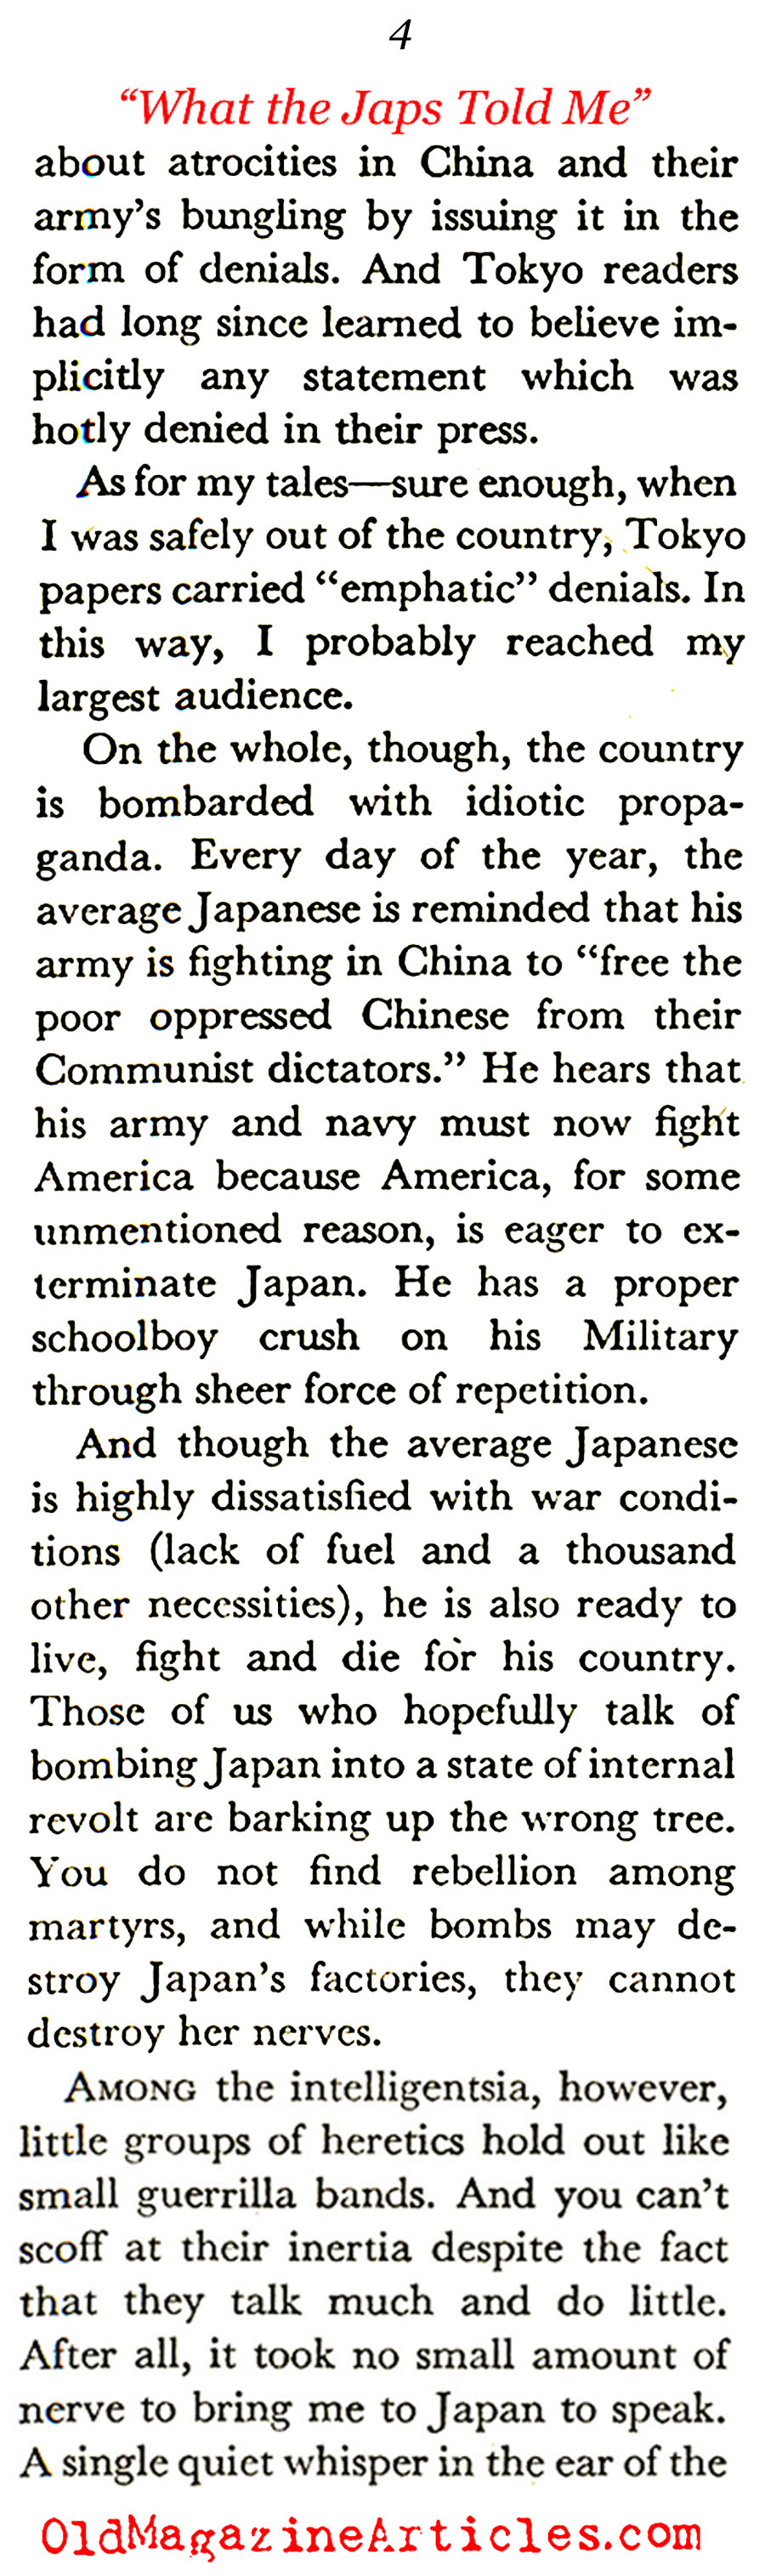 The Japanese Subversives (Coronet Magazine, 1943)